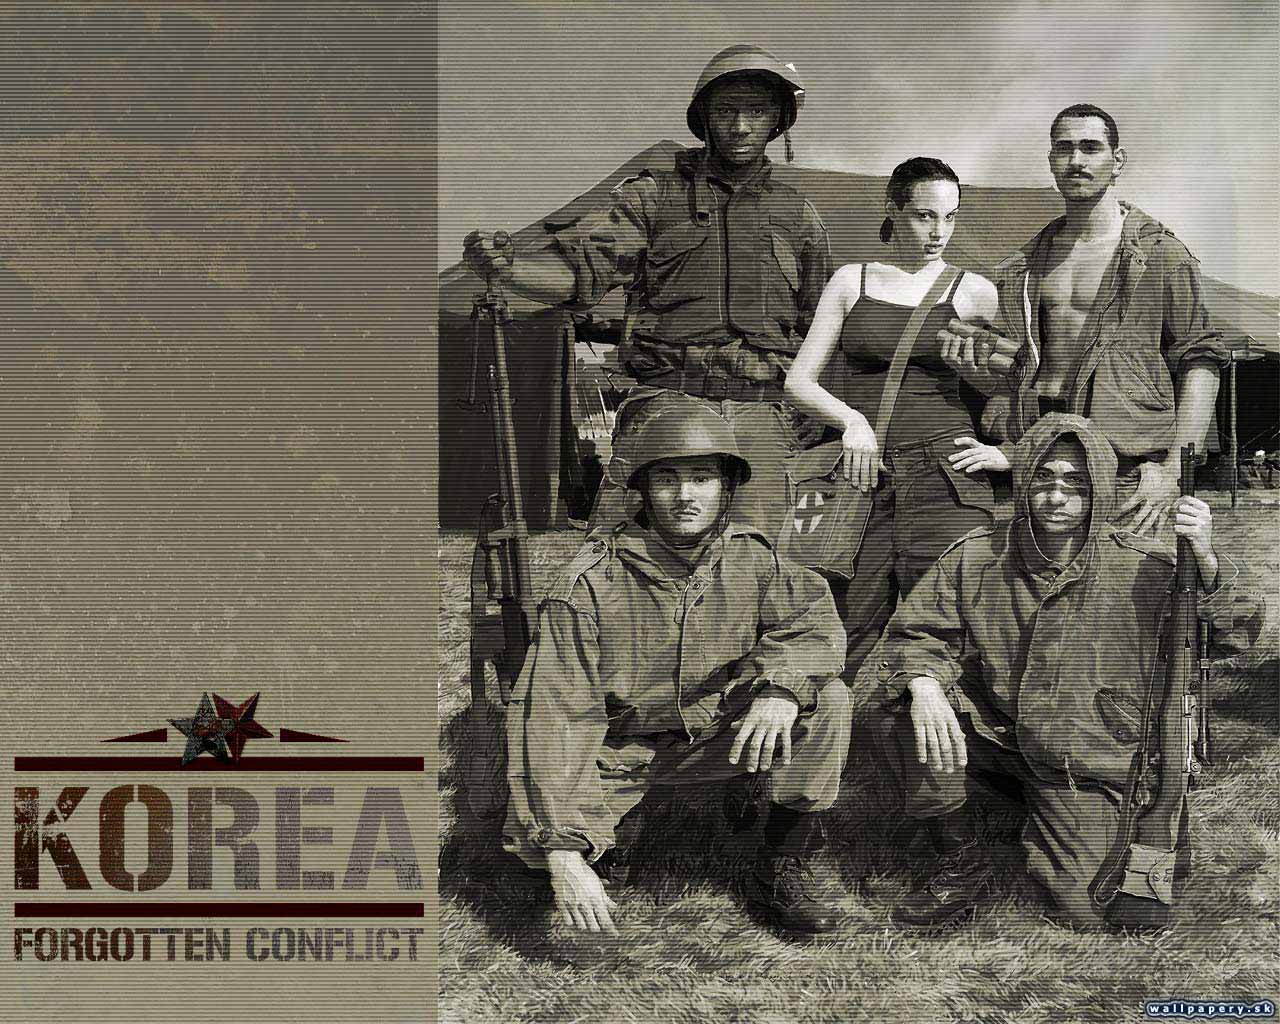 Korea: Forgotten Conflict - wallpaper 5